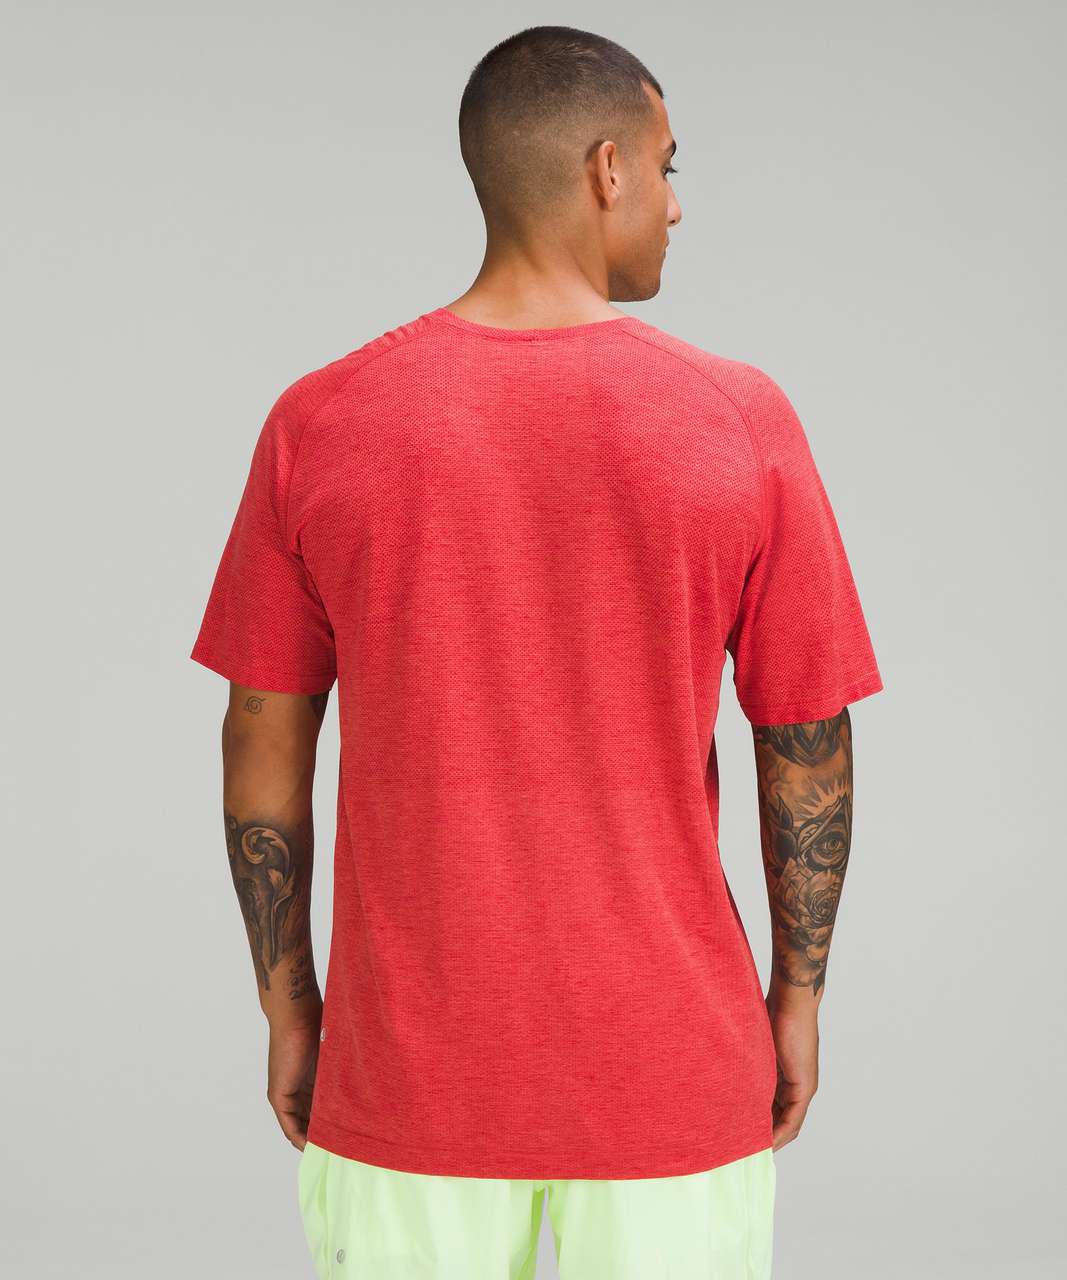 Lululemon Metal Vent Tech Short Sleeve Shirt 2.0 - Dark Red / Pale Raspberry